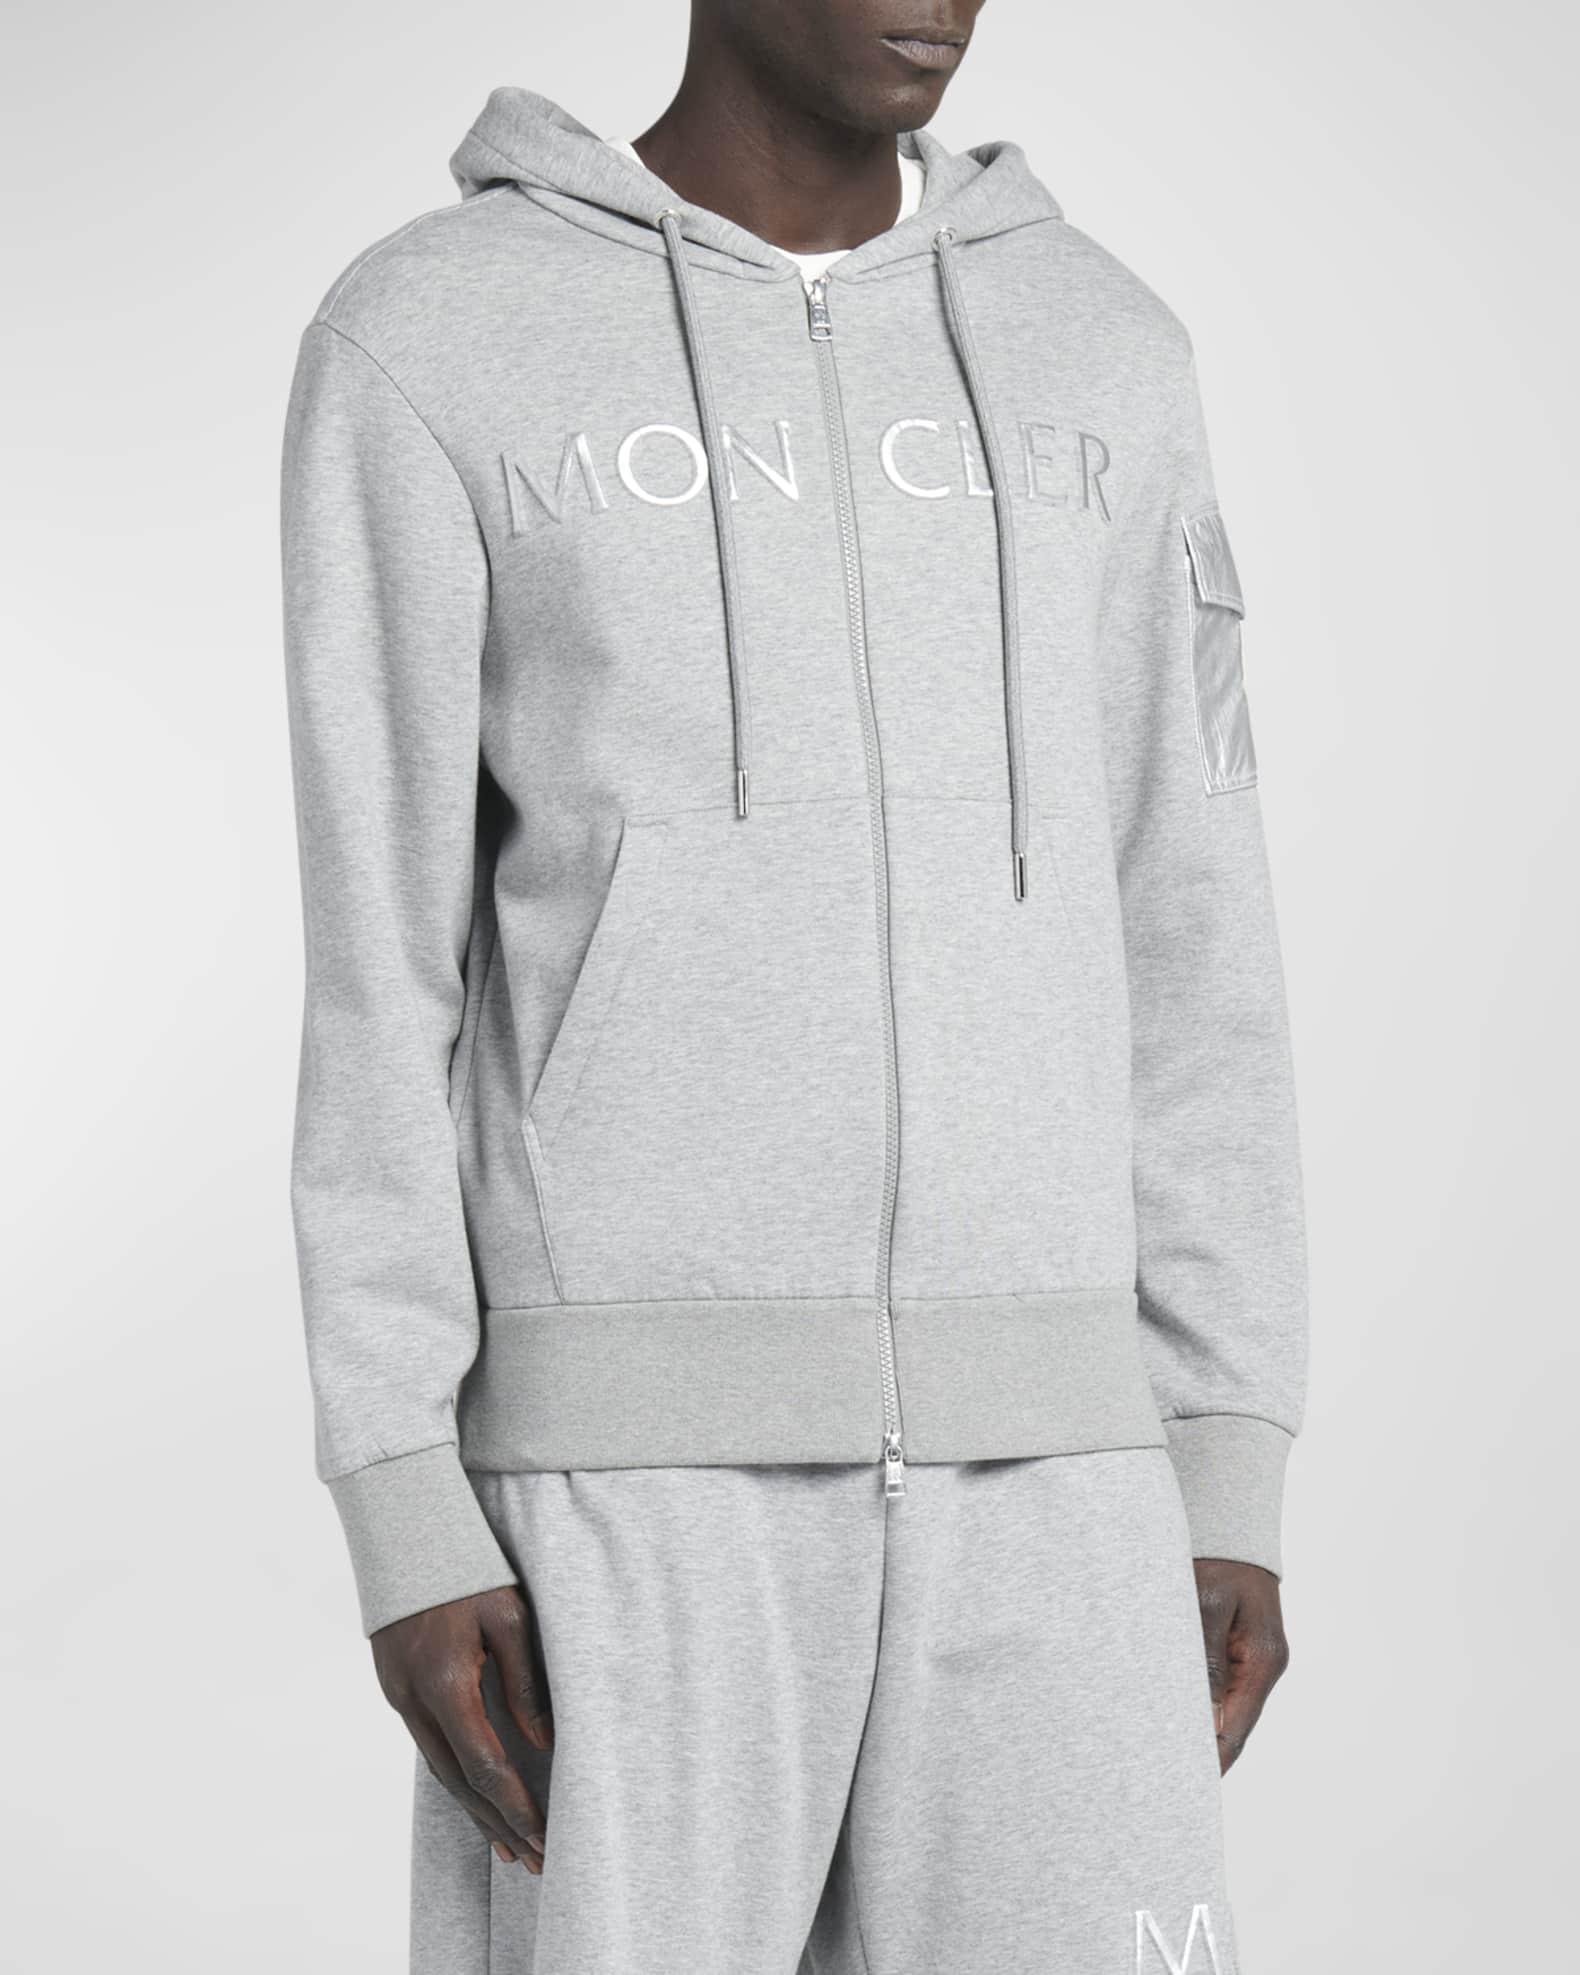 Moncler Zip Hoodie - Size M